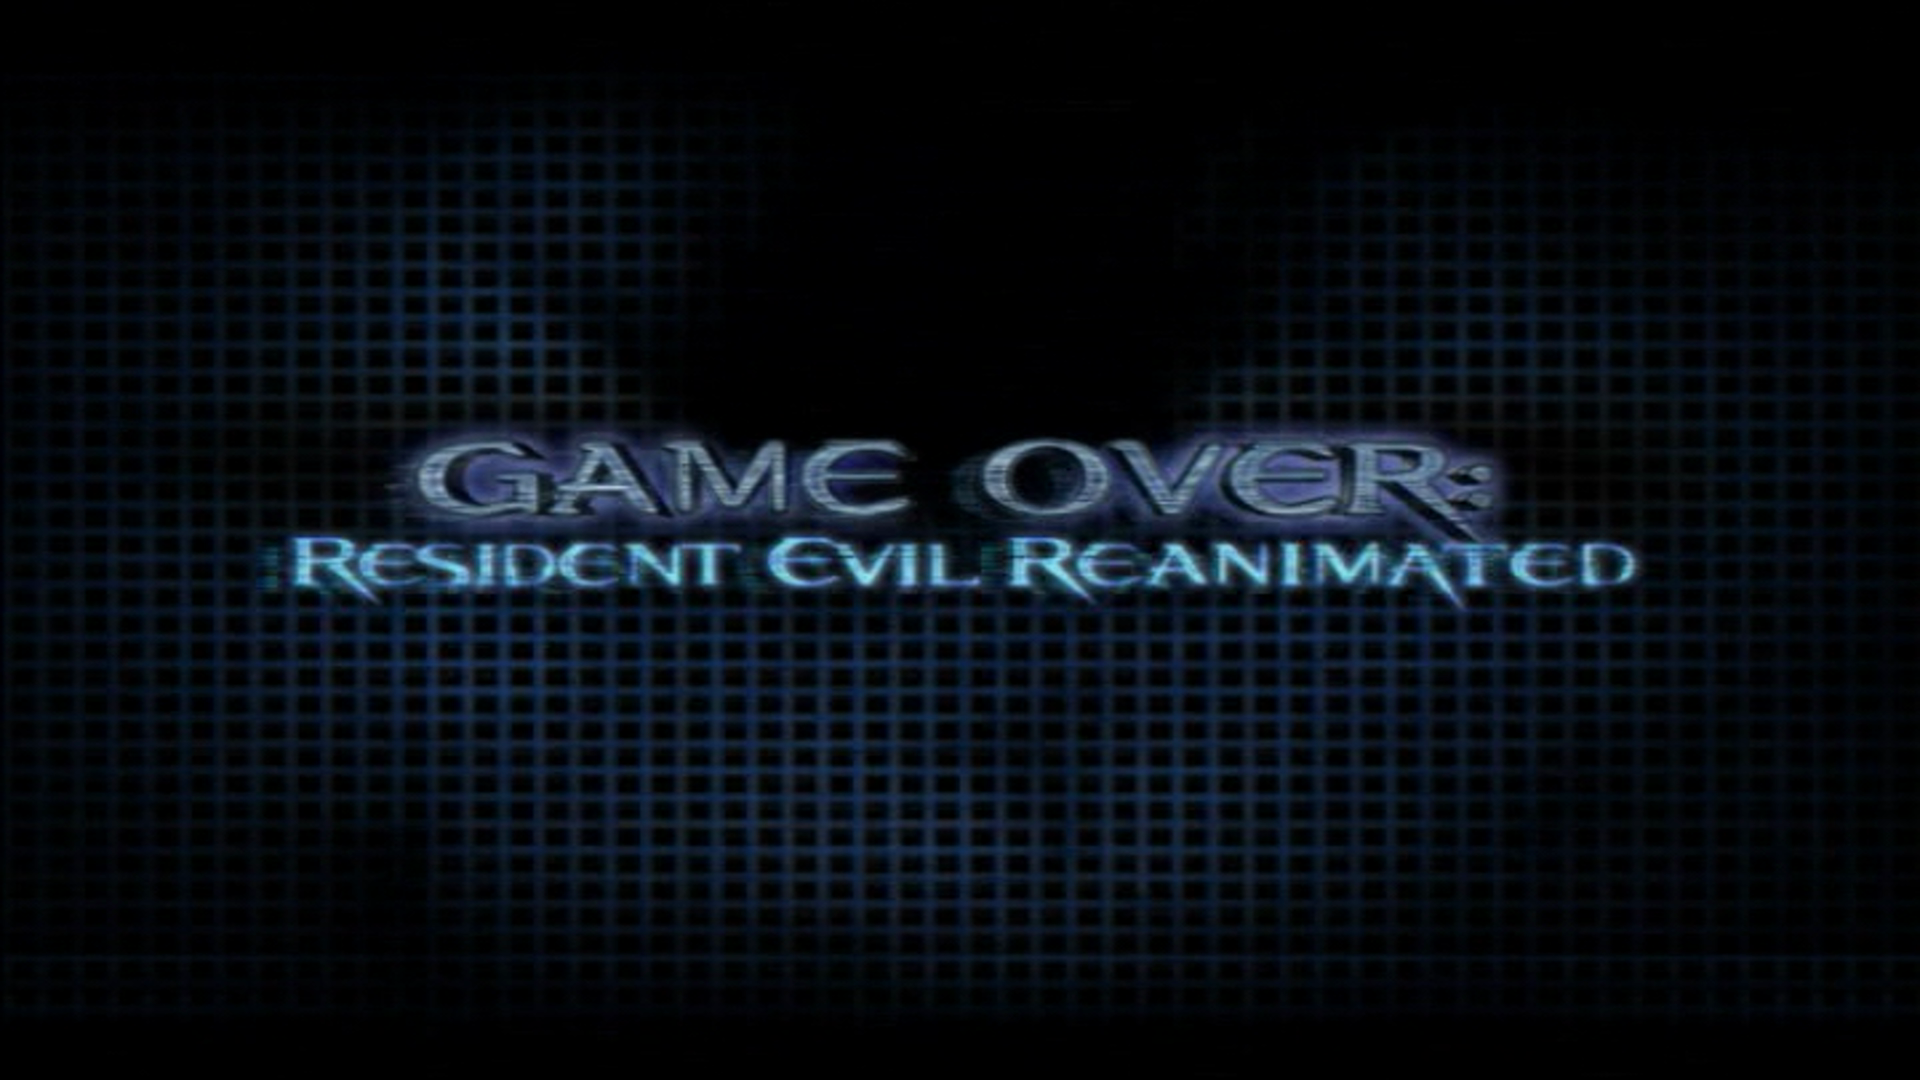 Resident Evil: Code: Veronica (Video Game 2000) - IMDb